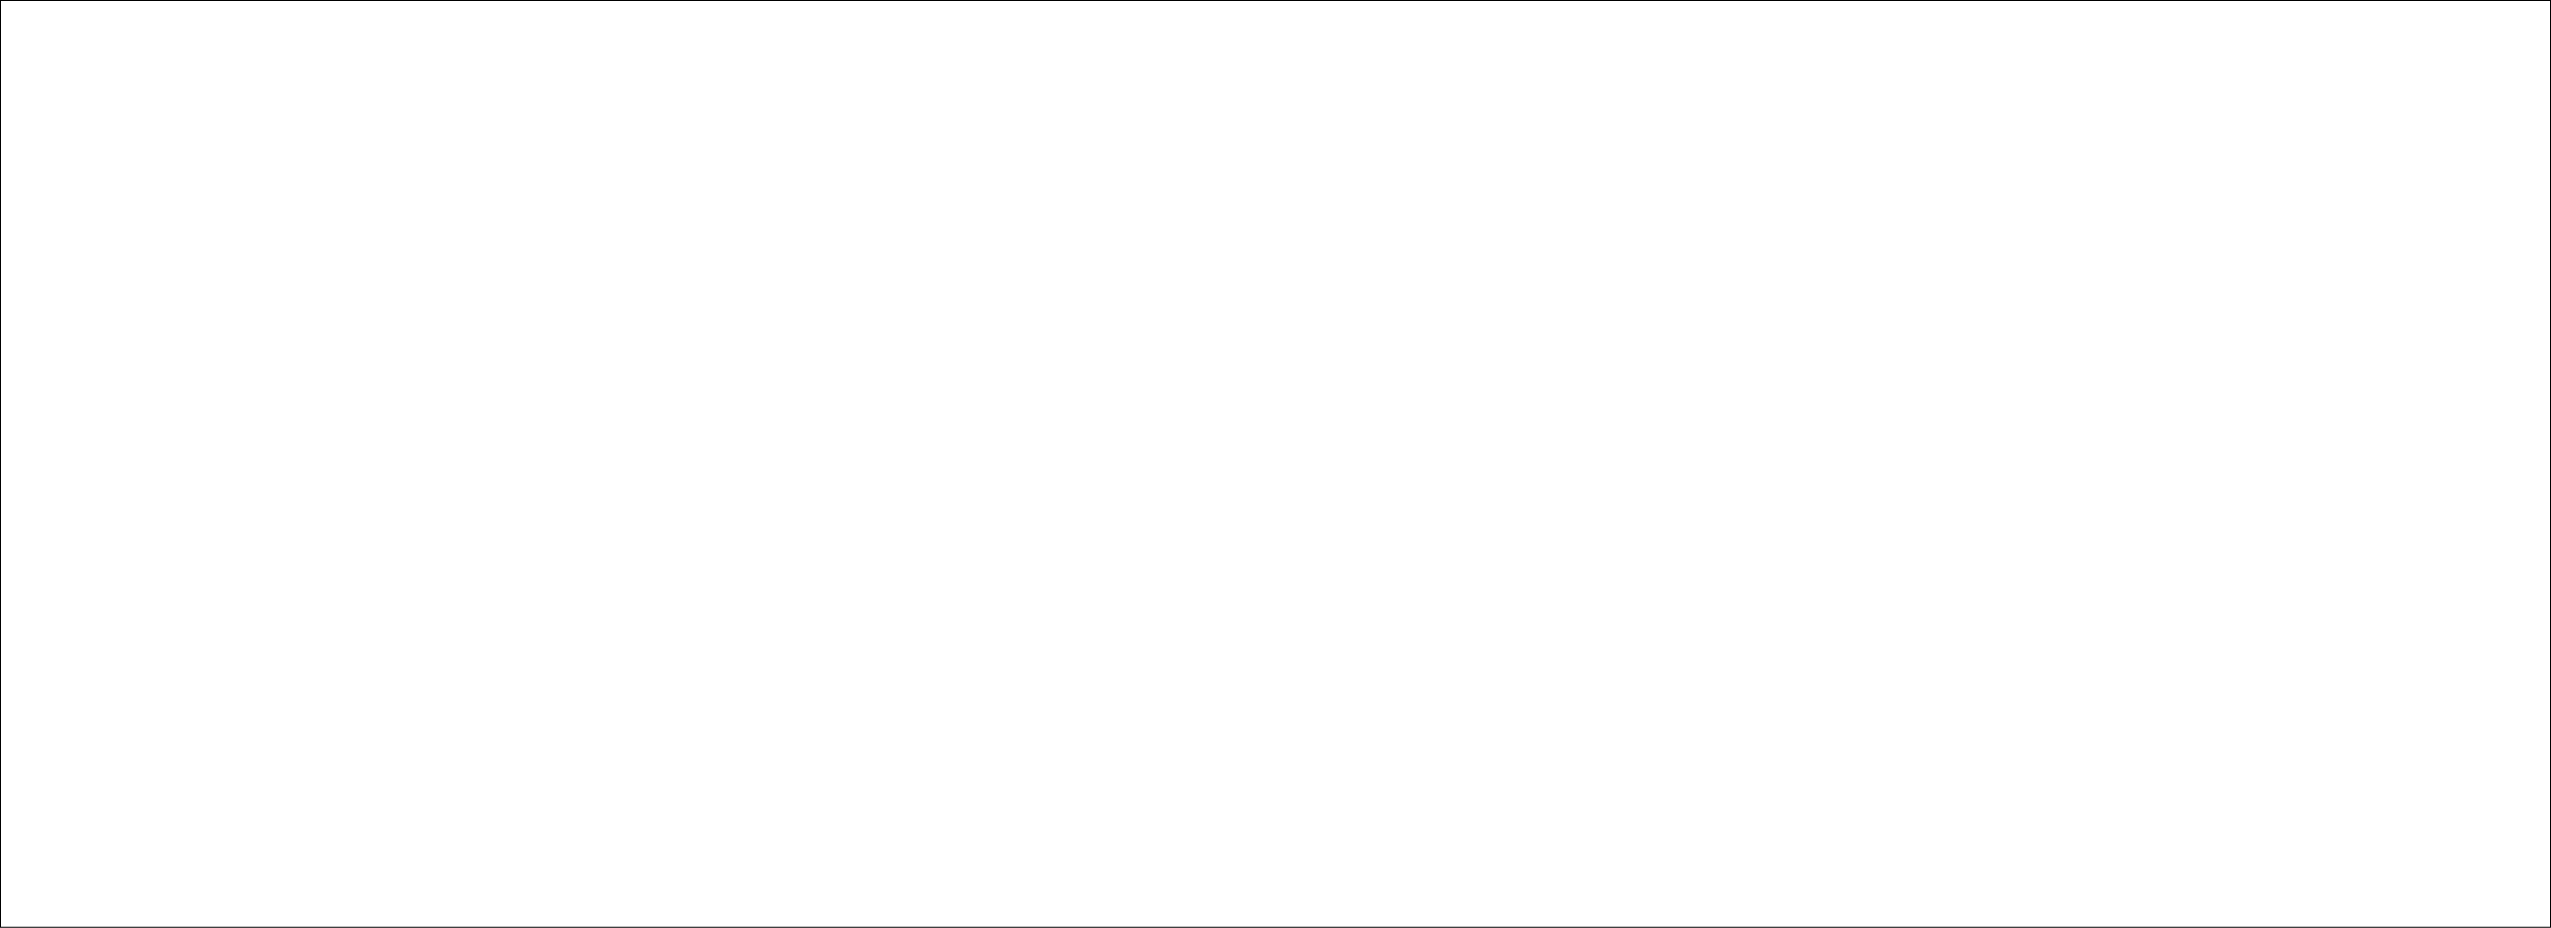 Royal Sporting Goods